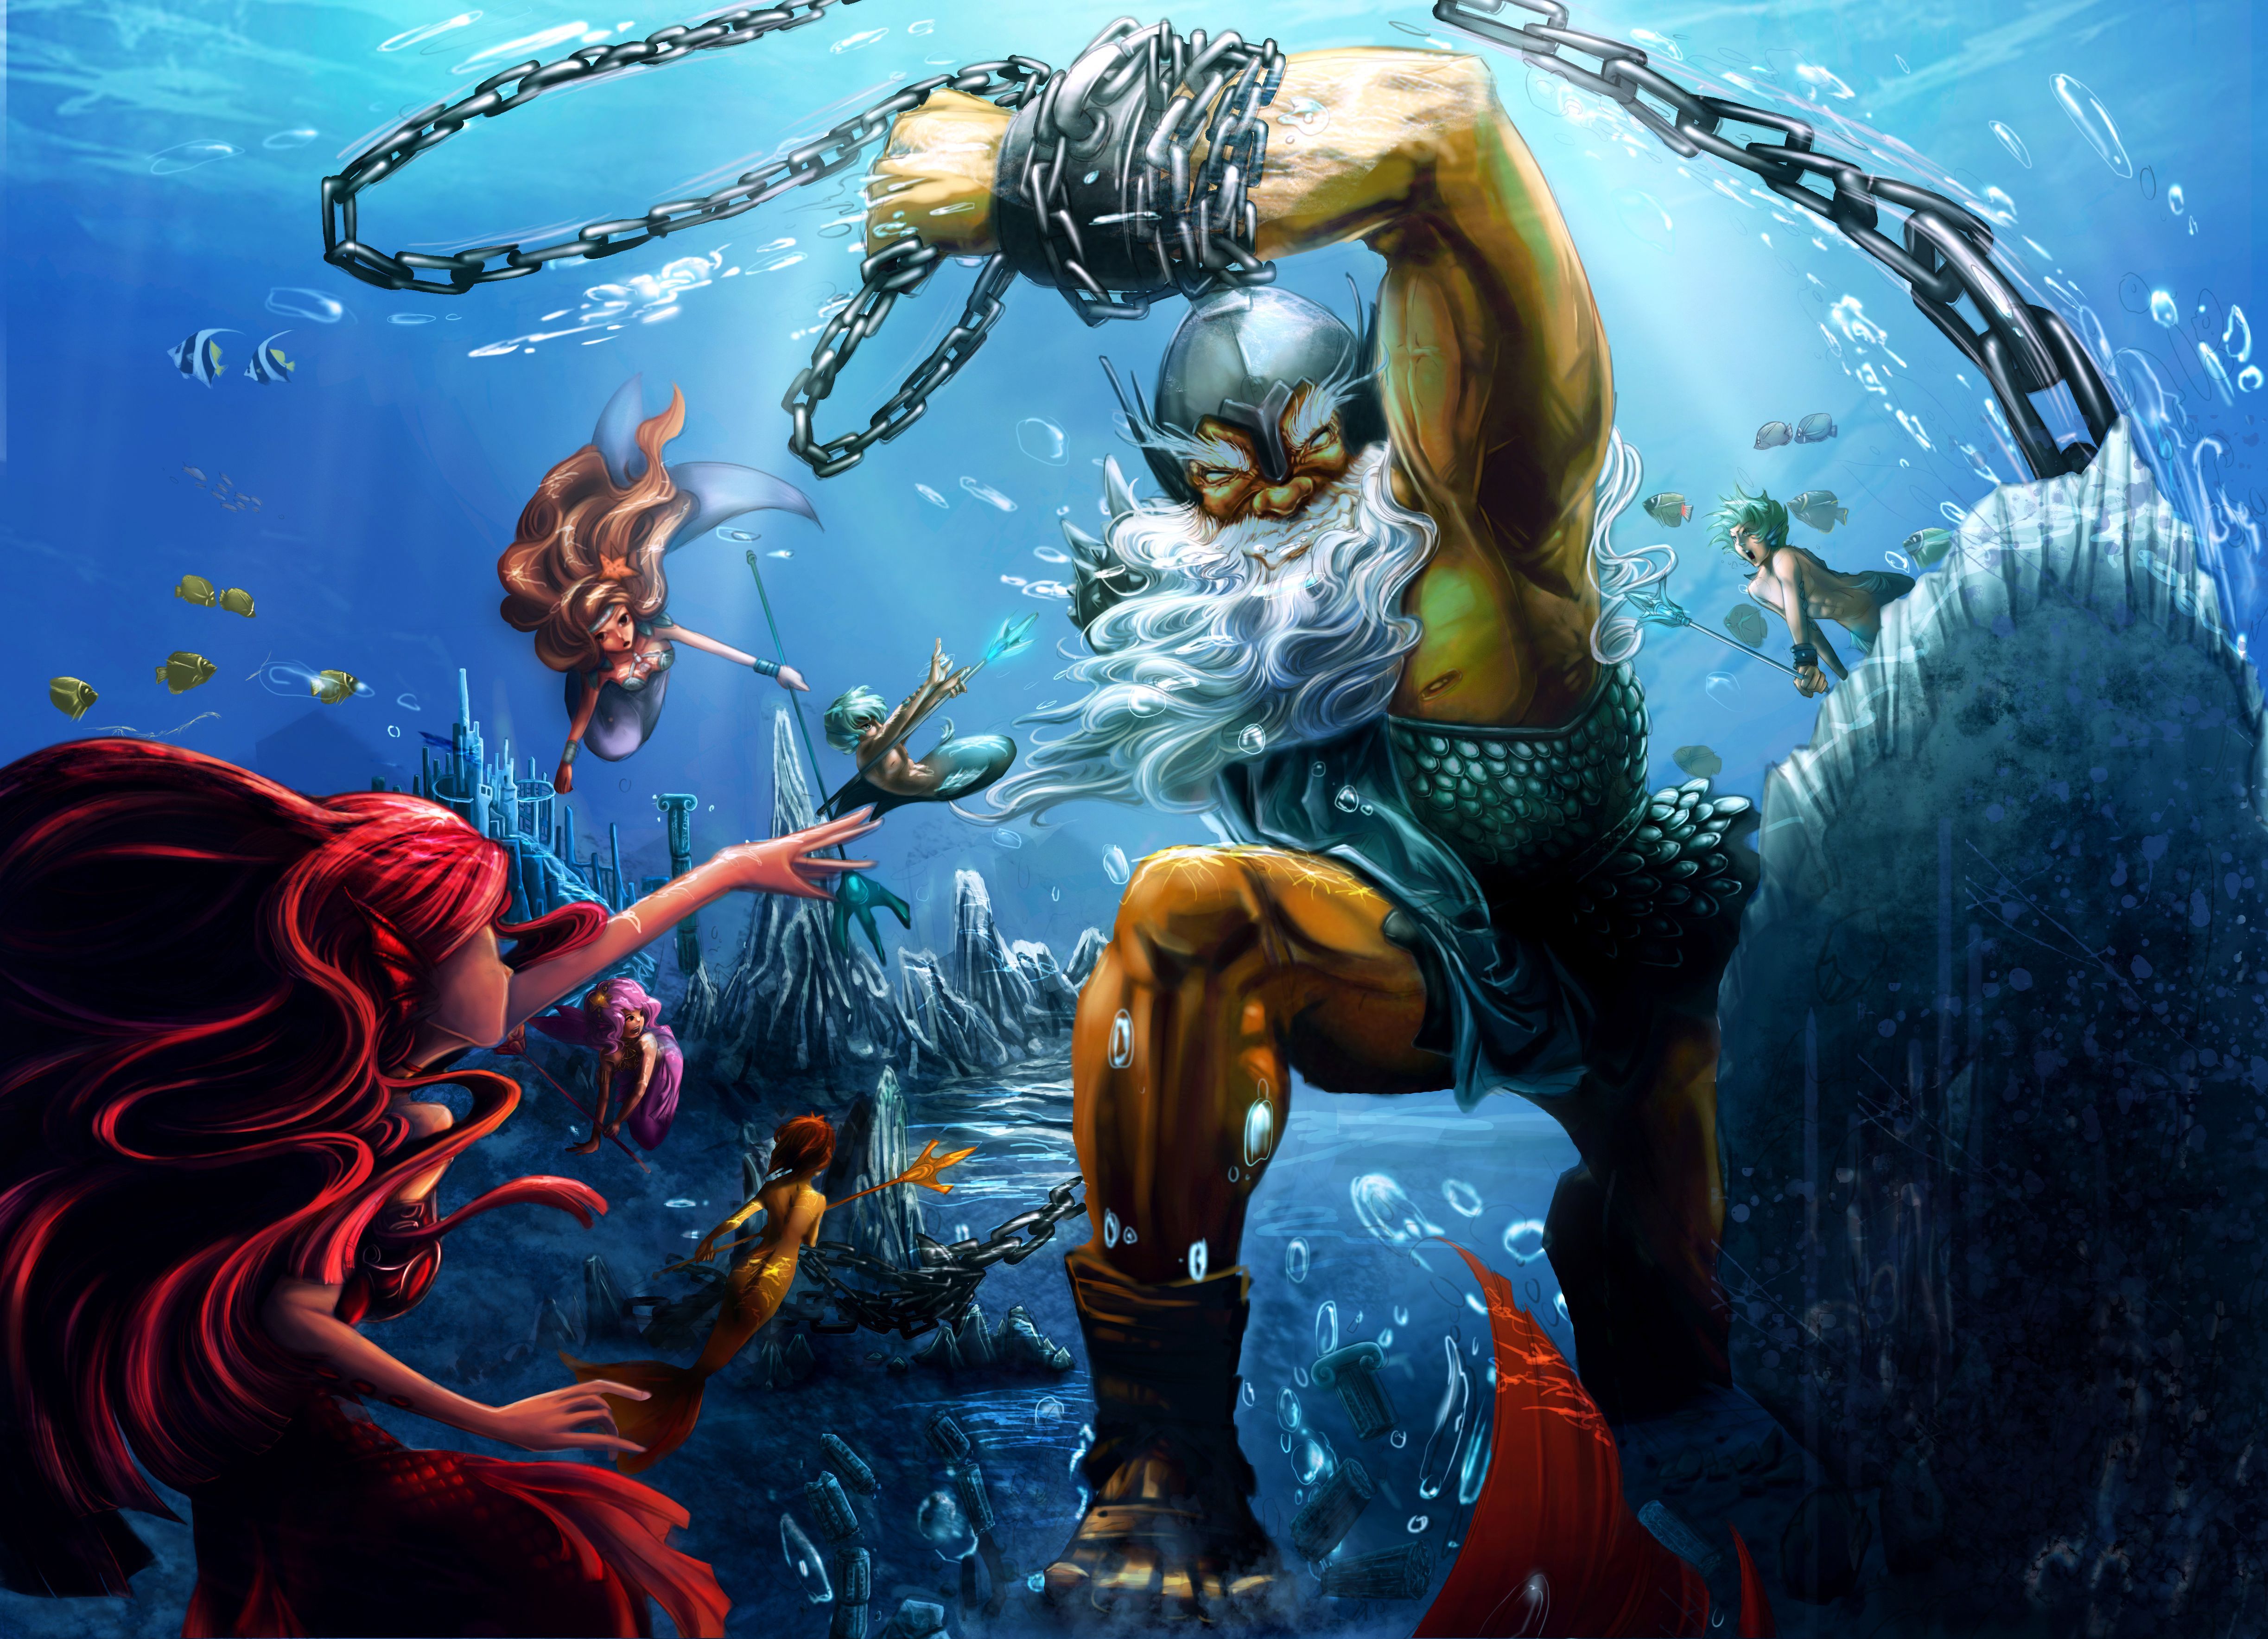 Fantasy art mermaids babes warriors weapons chain underwater battle ocean wallpaperx3535